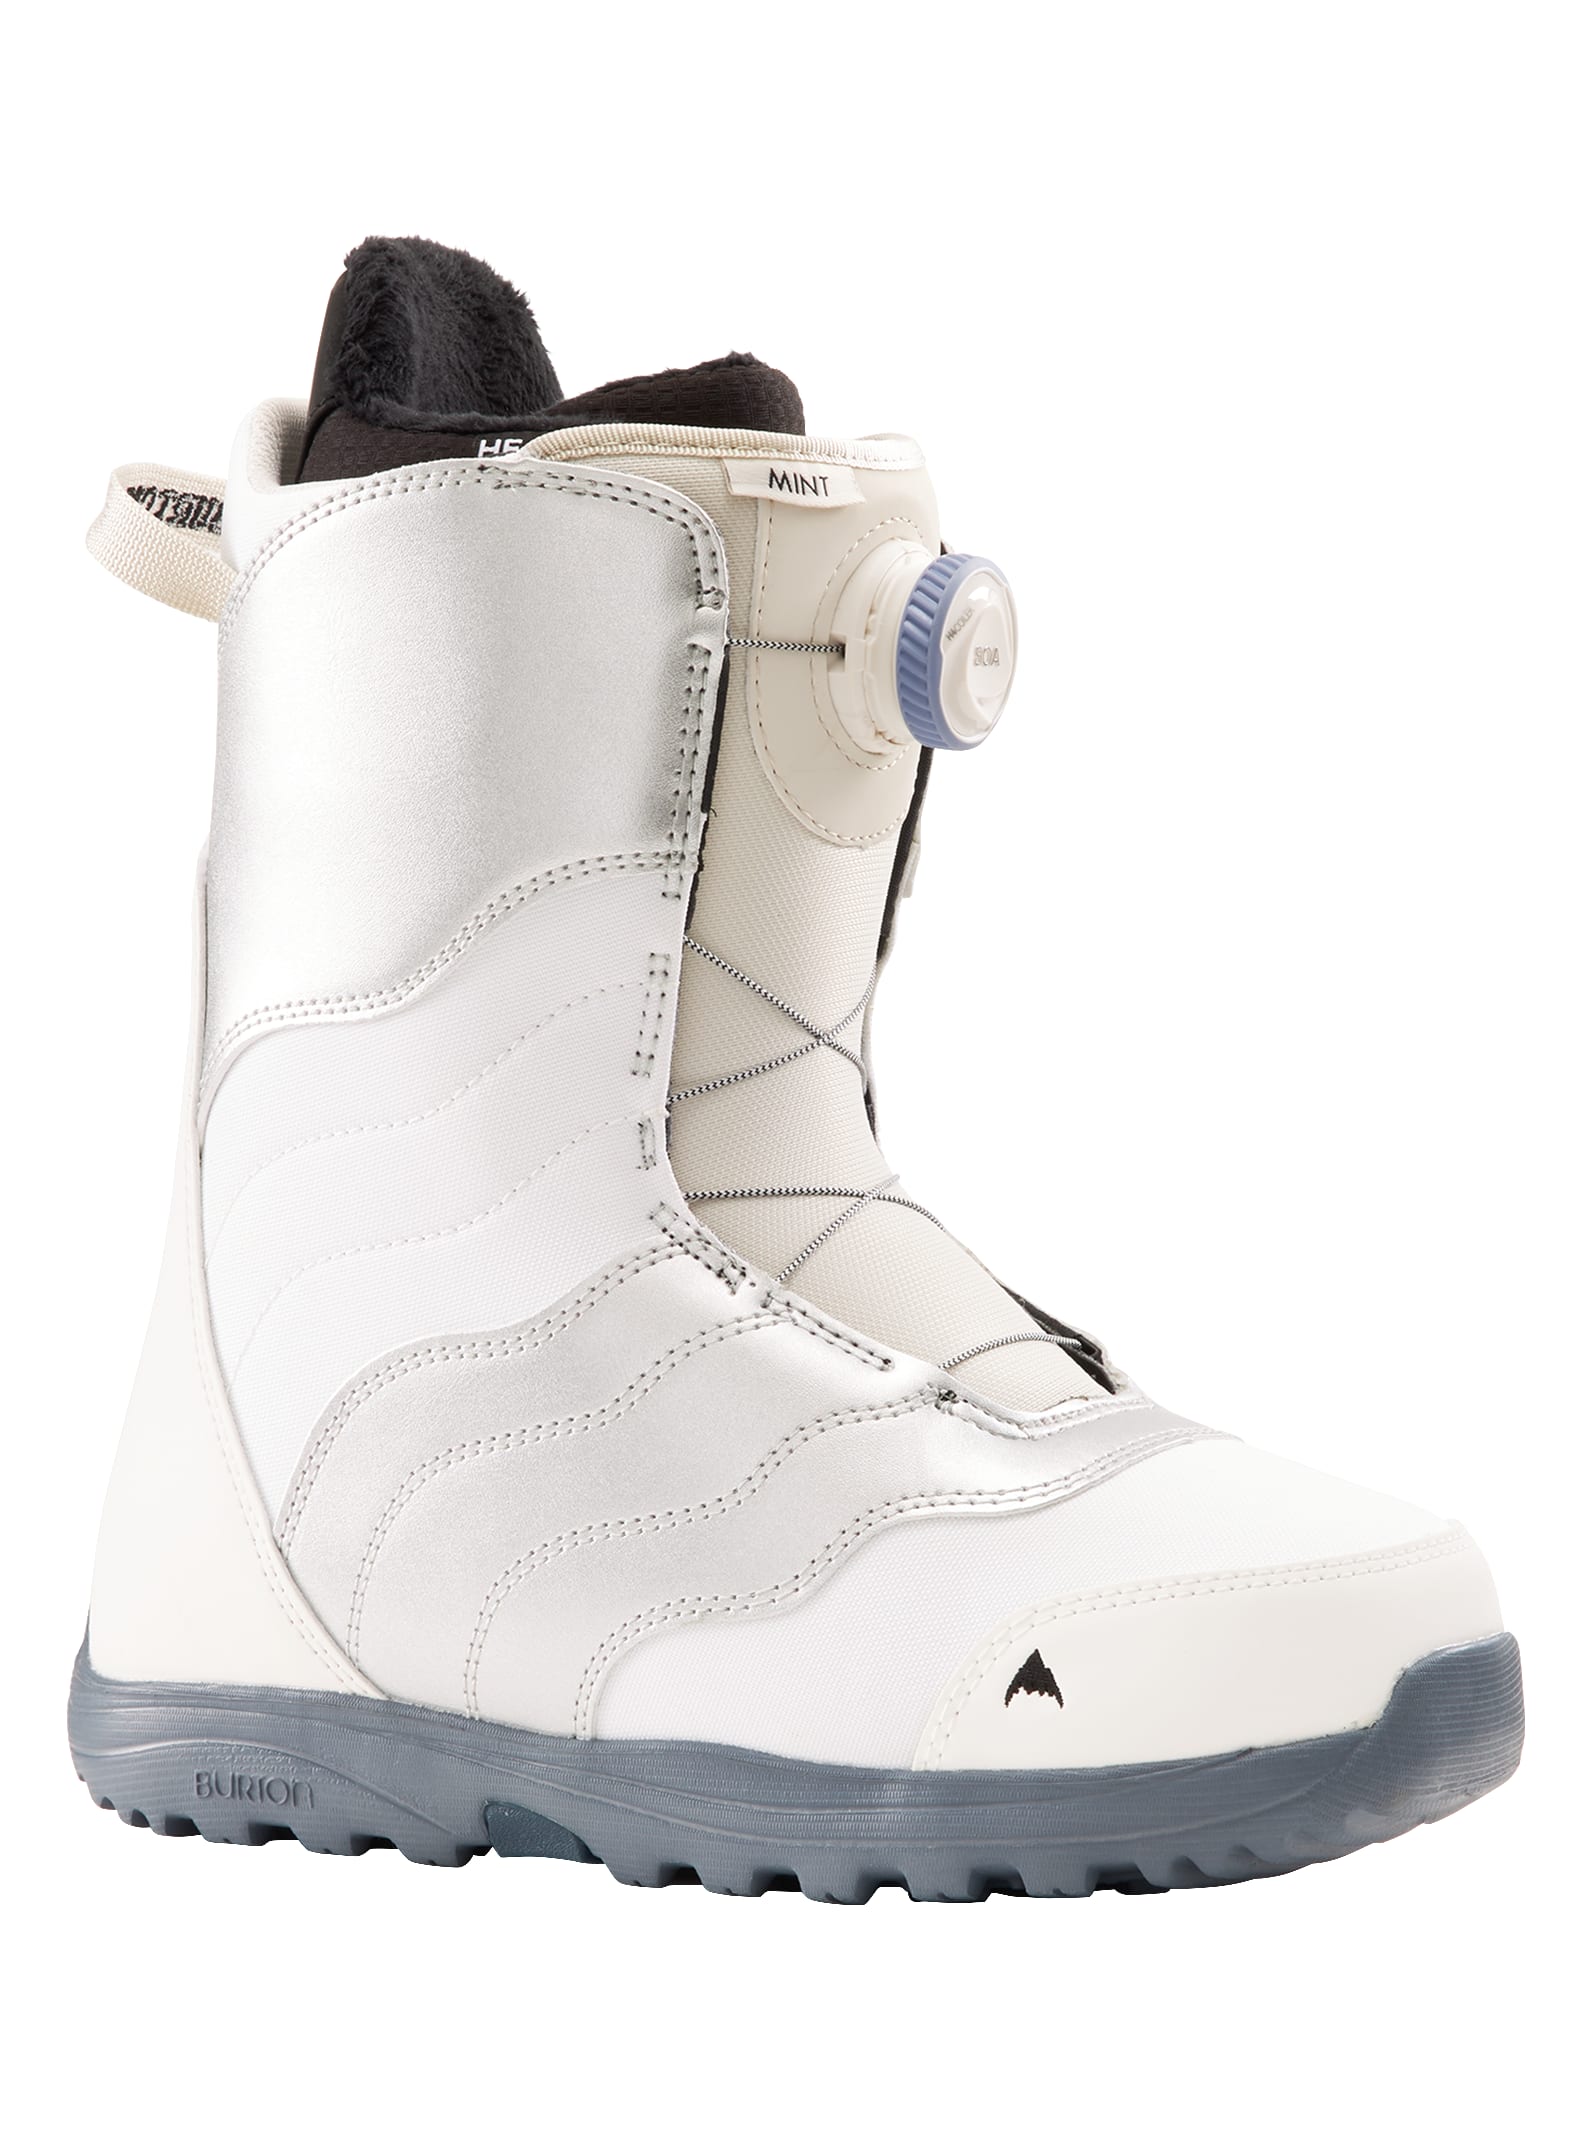 Women's Burton Mint BOA® Snowboard Boots - Wide | Burton.com Winter 2022 US